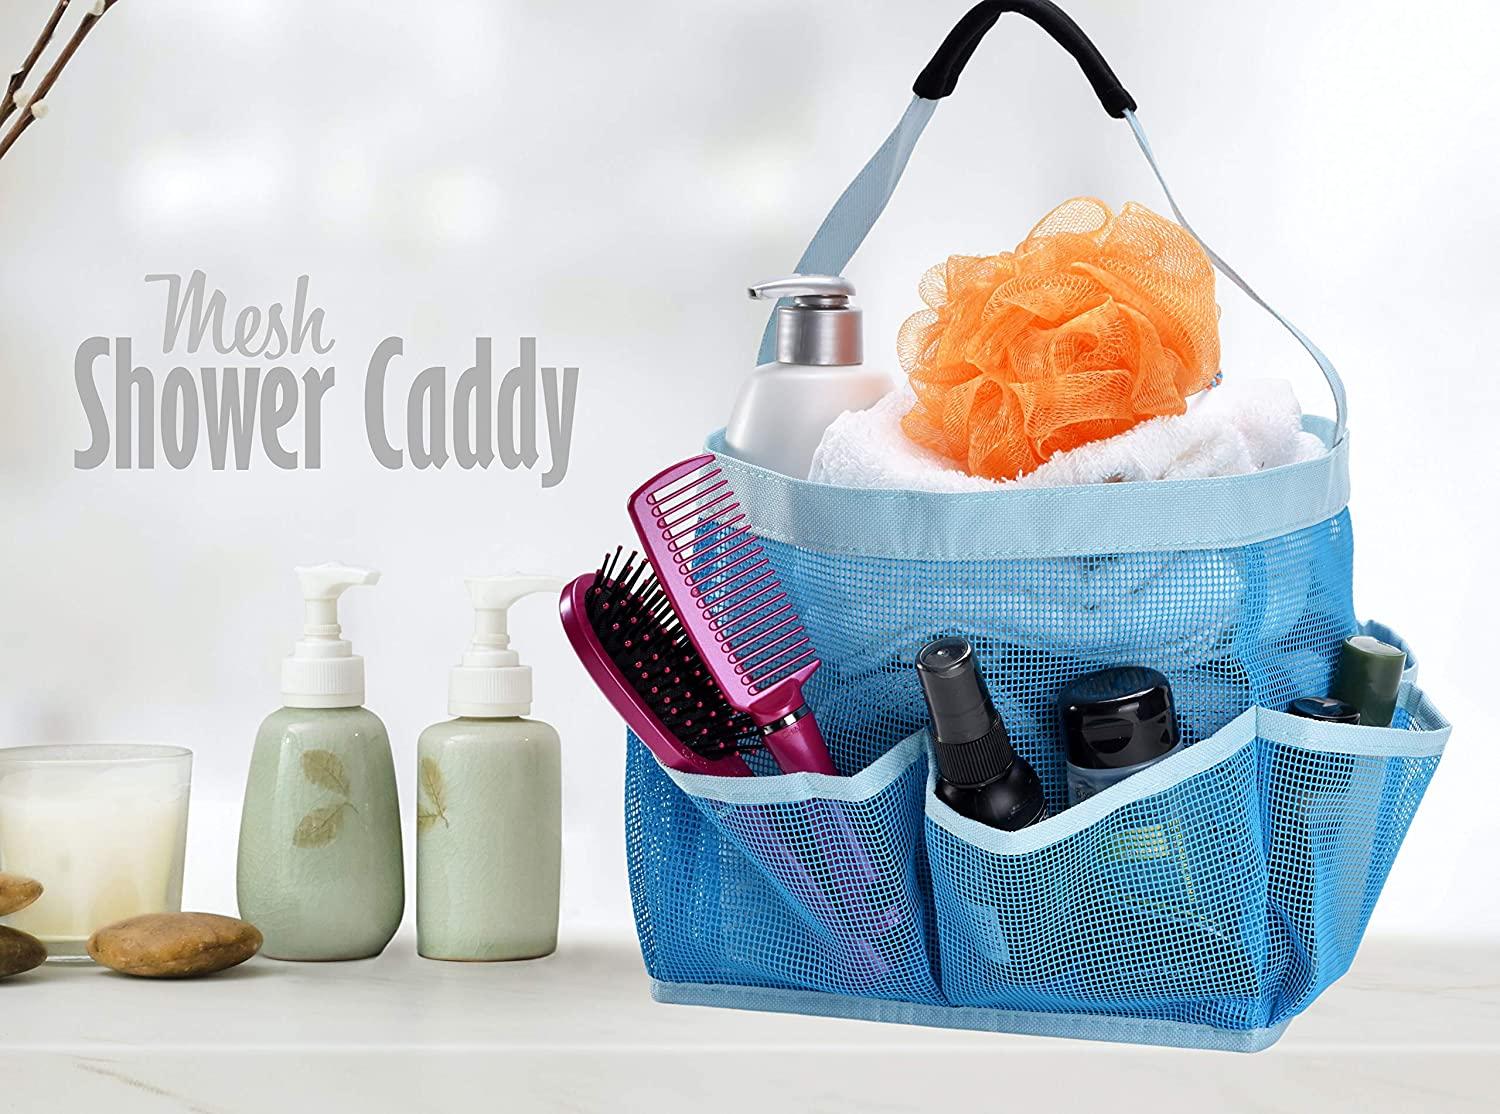 Dorm Room Shower Caddy and Bathroom Essentials - Organize and